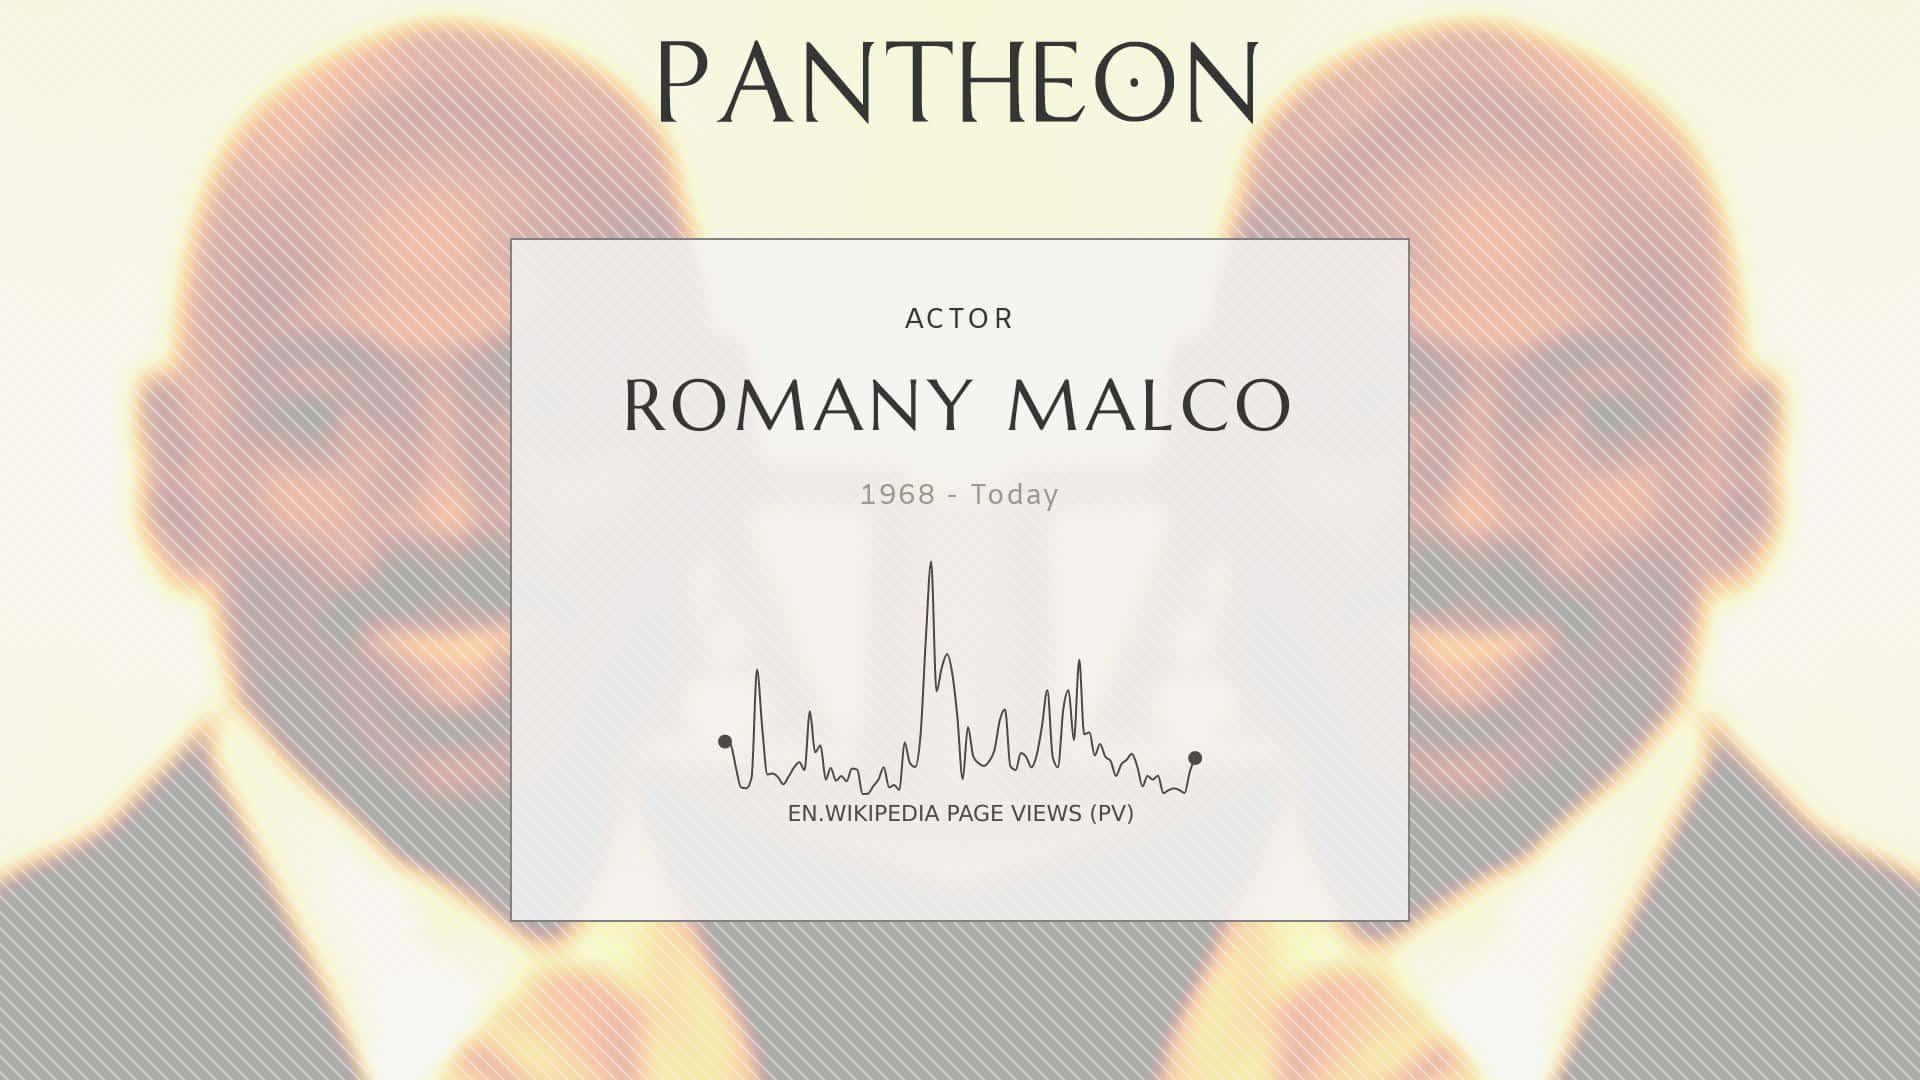 Romanymalco Pantheon Profilansichten Diagramm Wallpaper